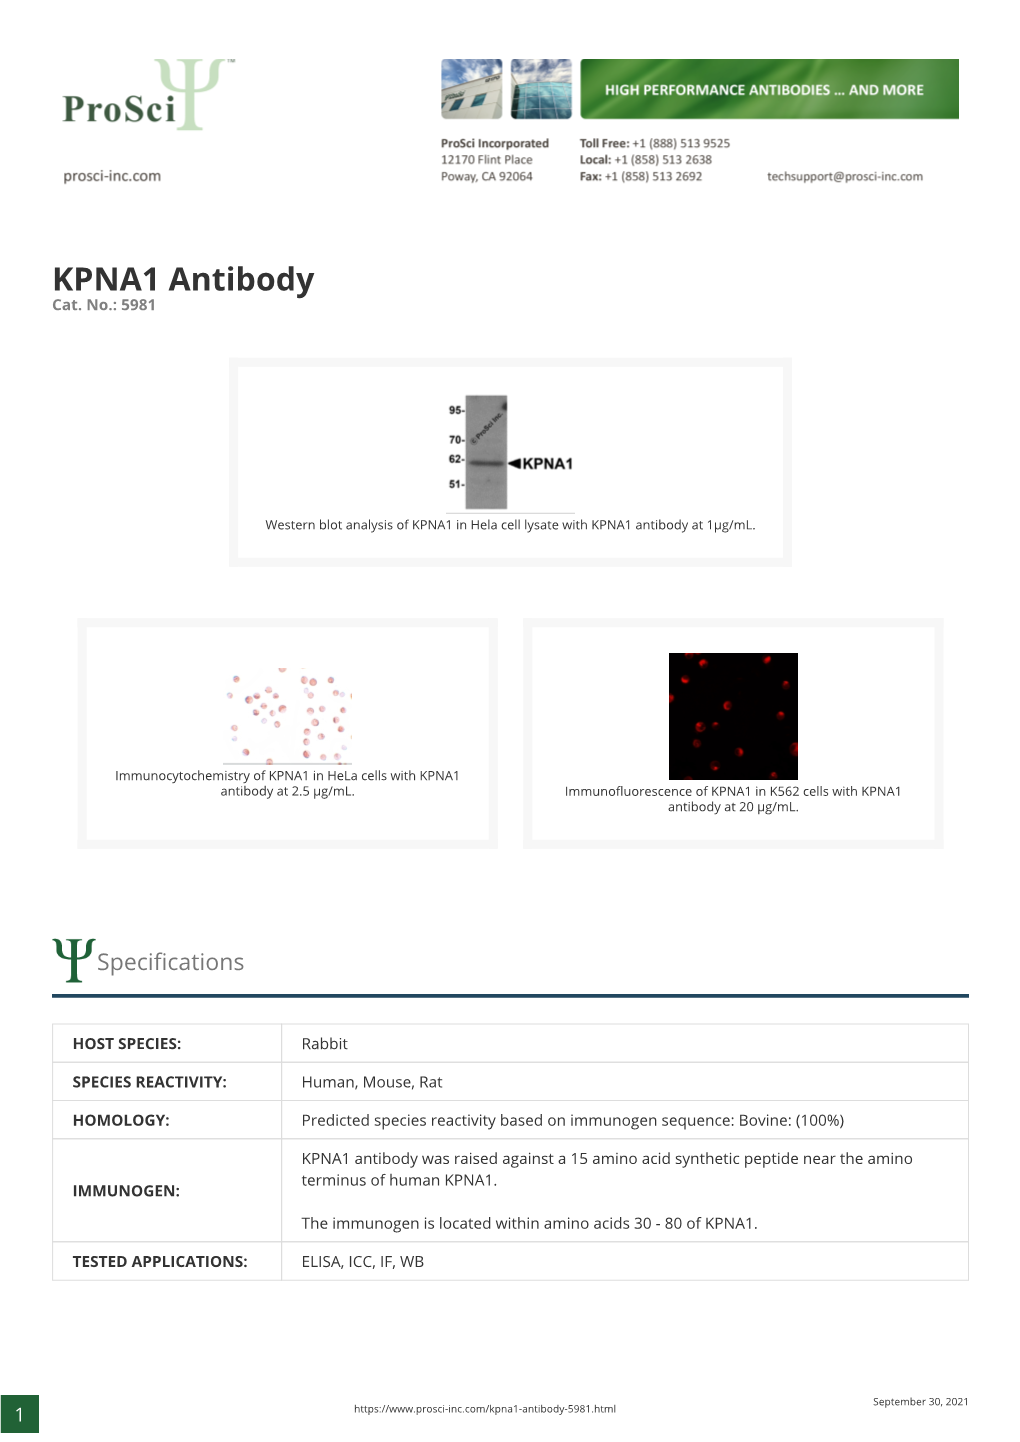 KPNA1 Antibody Cat